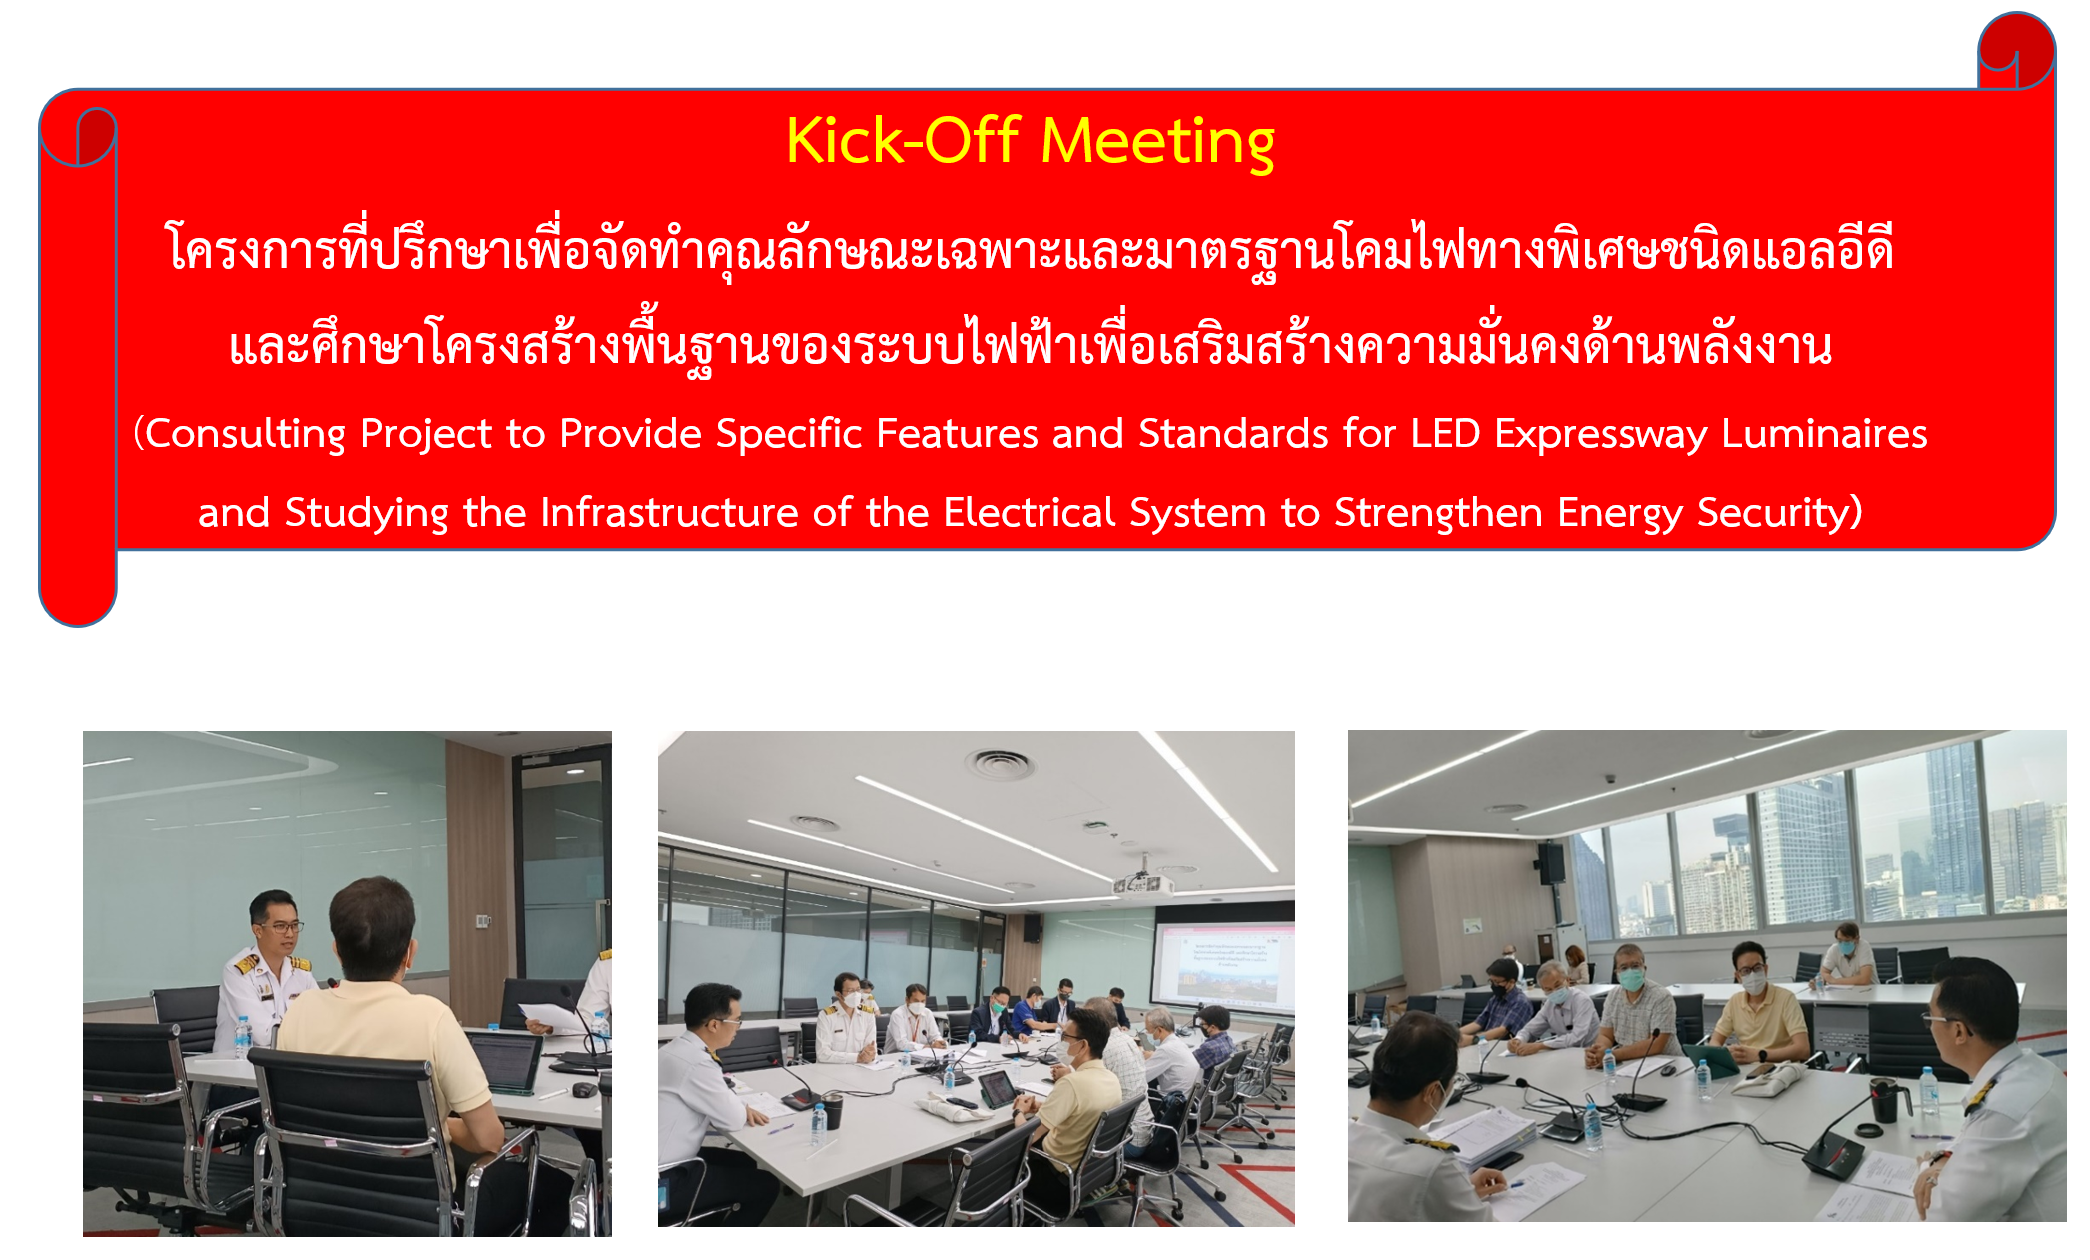 Kick-Off Meeting " โครงการที่ปรึกษาเพื่อจัดทำคุณลักษณะเฉพาะและมาตรฐานโคมไฟทางพิเศษชนิดแอลอีดี และศึกษาโครงสร้างพื้นฐานของระบบไฟฟ้าเพื่อเสริมสร้างความมั่นคงด้านพลังงาน " (Consulting Project to Provide Specific Features and Standards for LED Expressway Luminaires and Studying the Infrastructure of the Electrical System to Strengthen Energy Security)